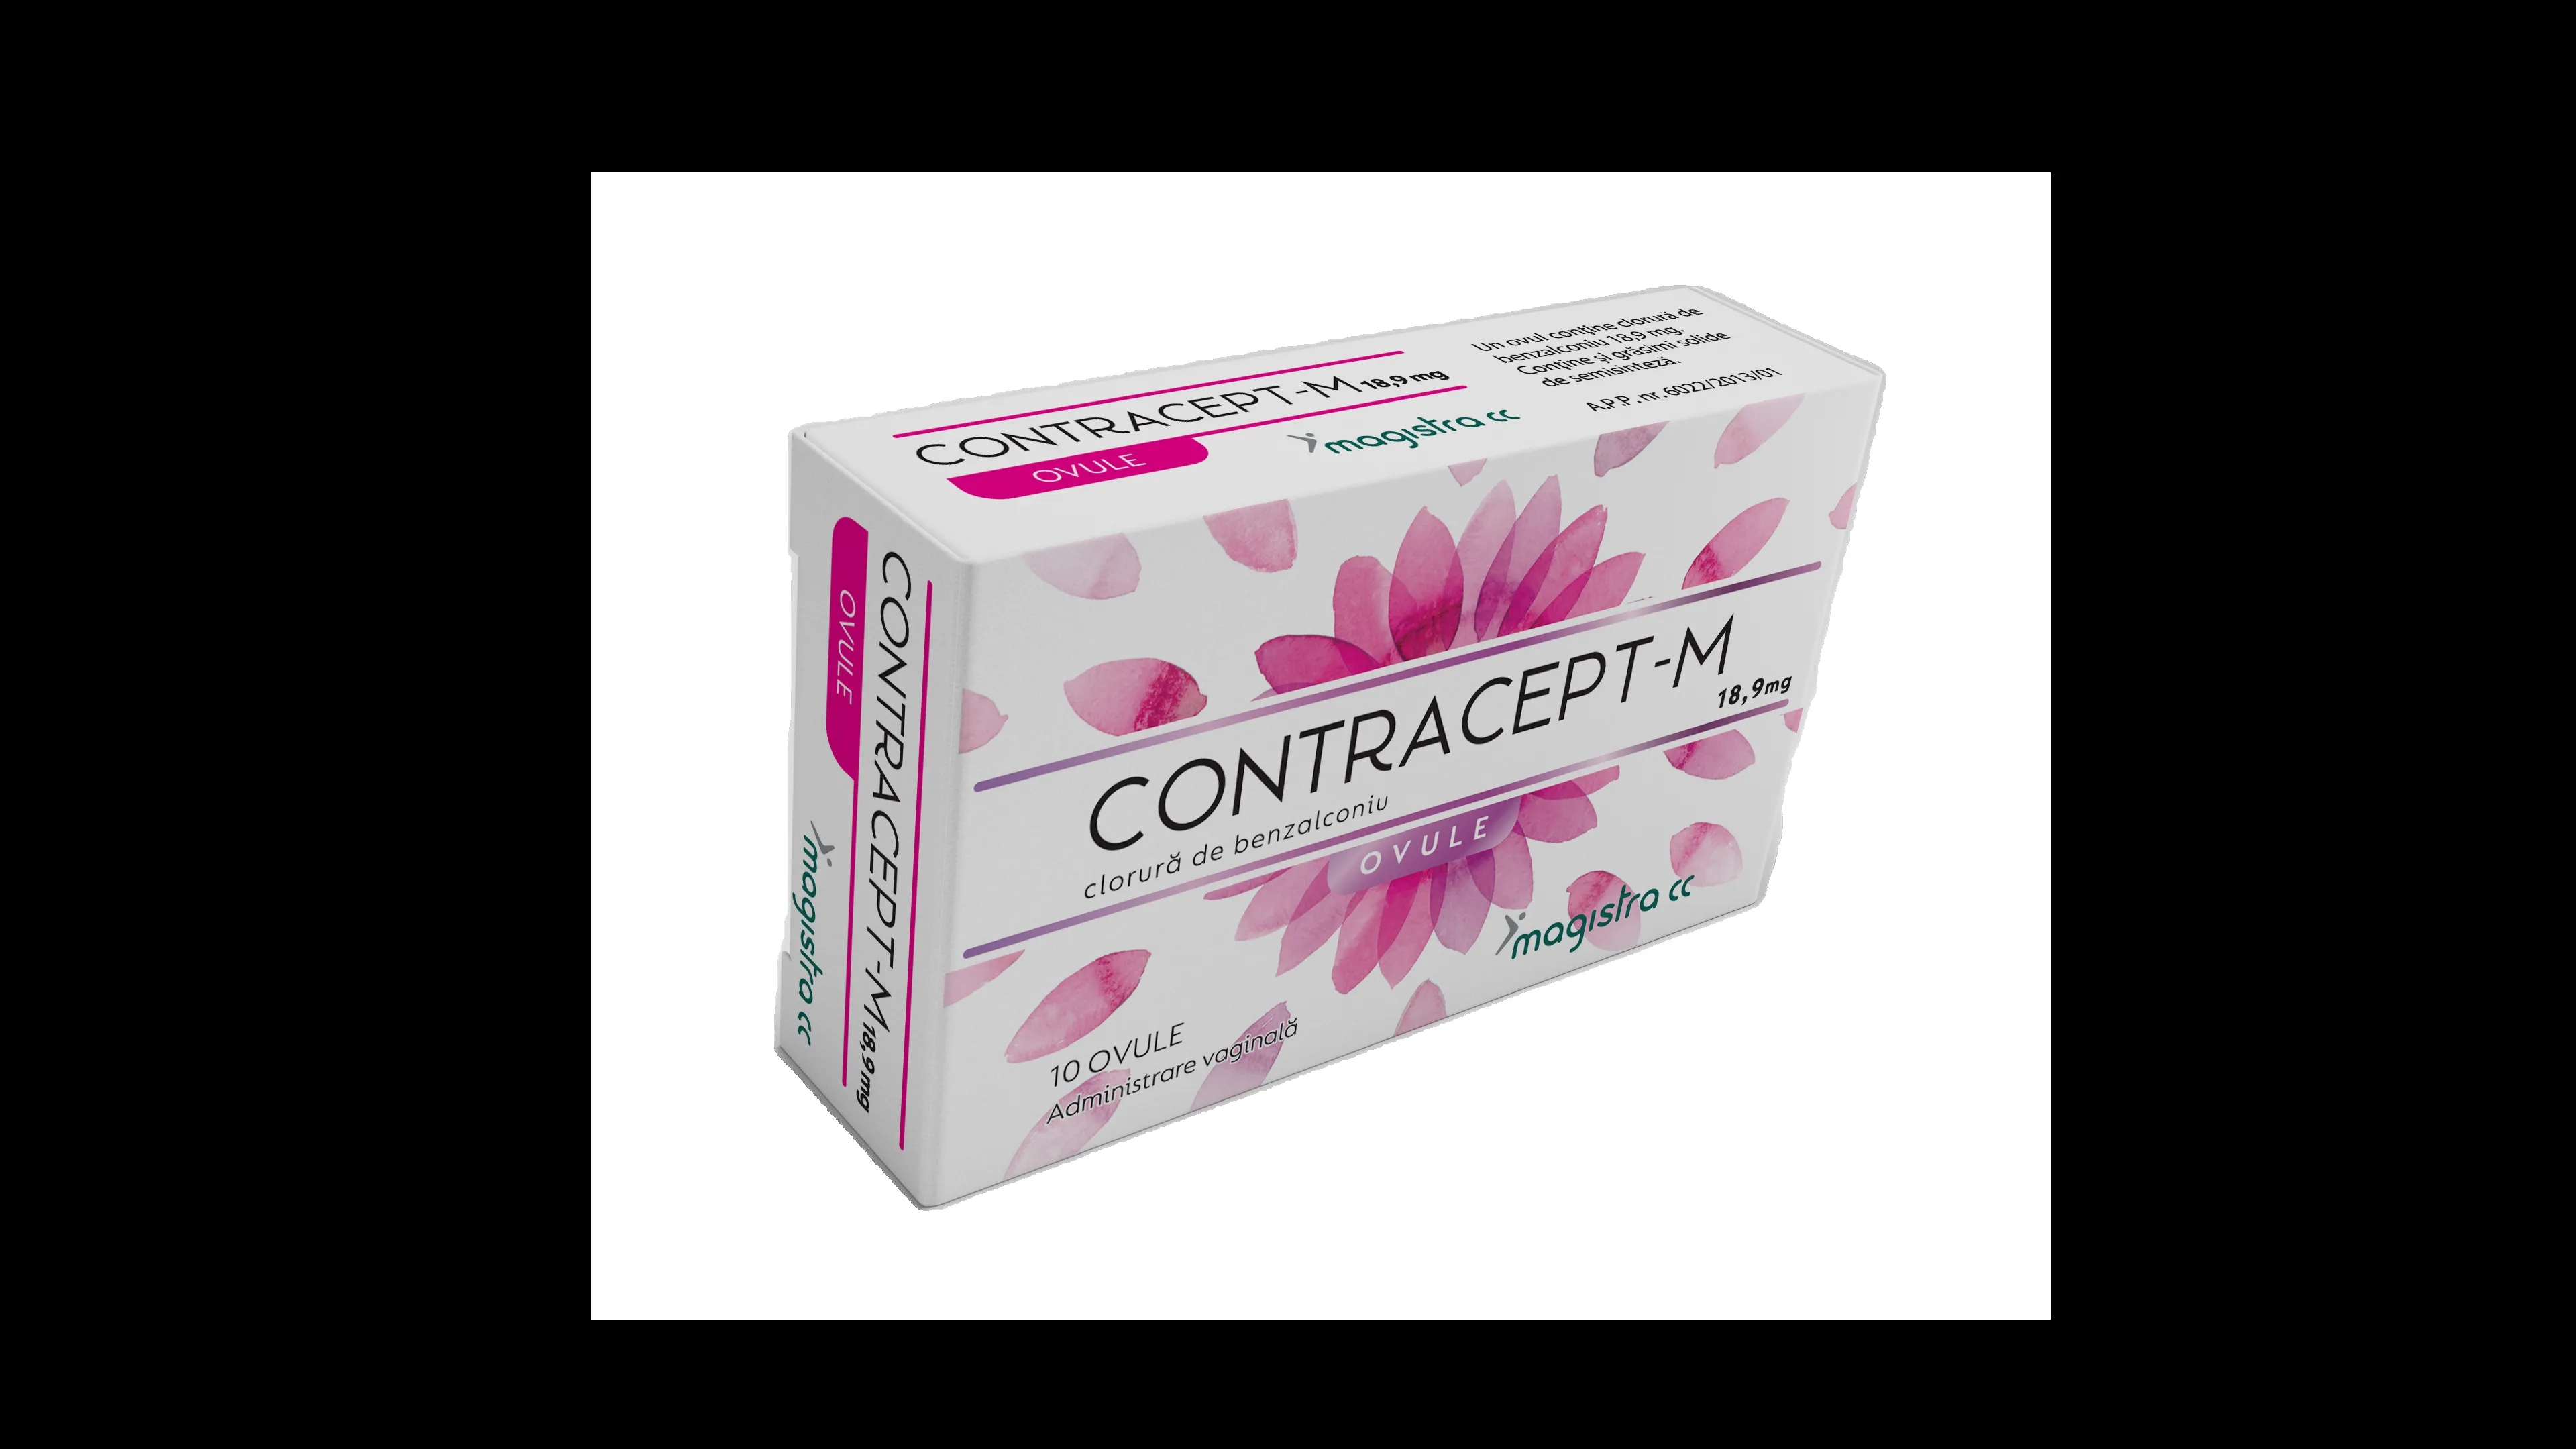 Contracept M 18,9 mg  10 ovule